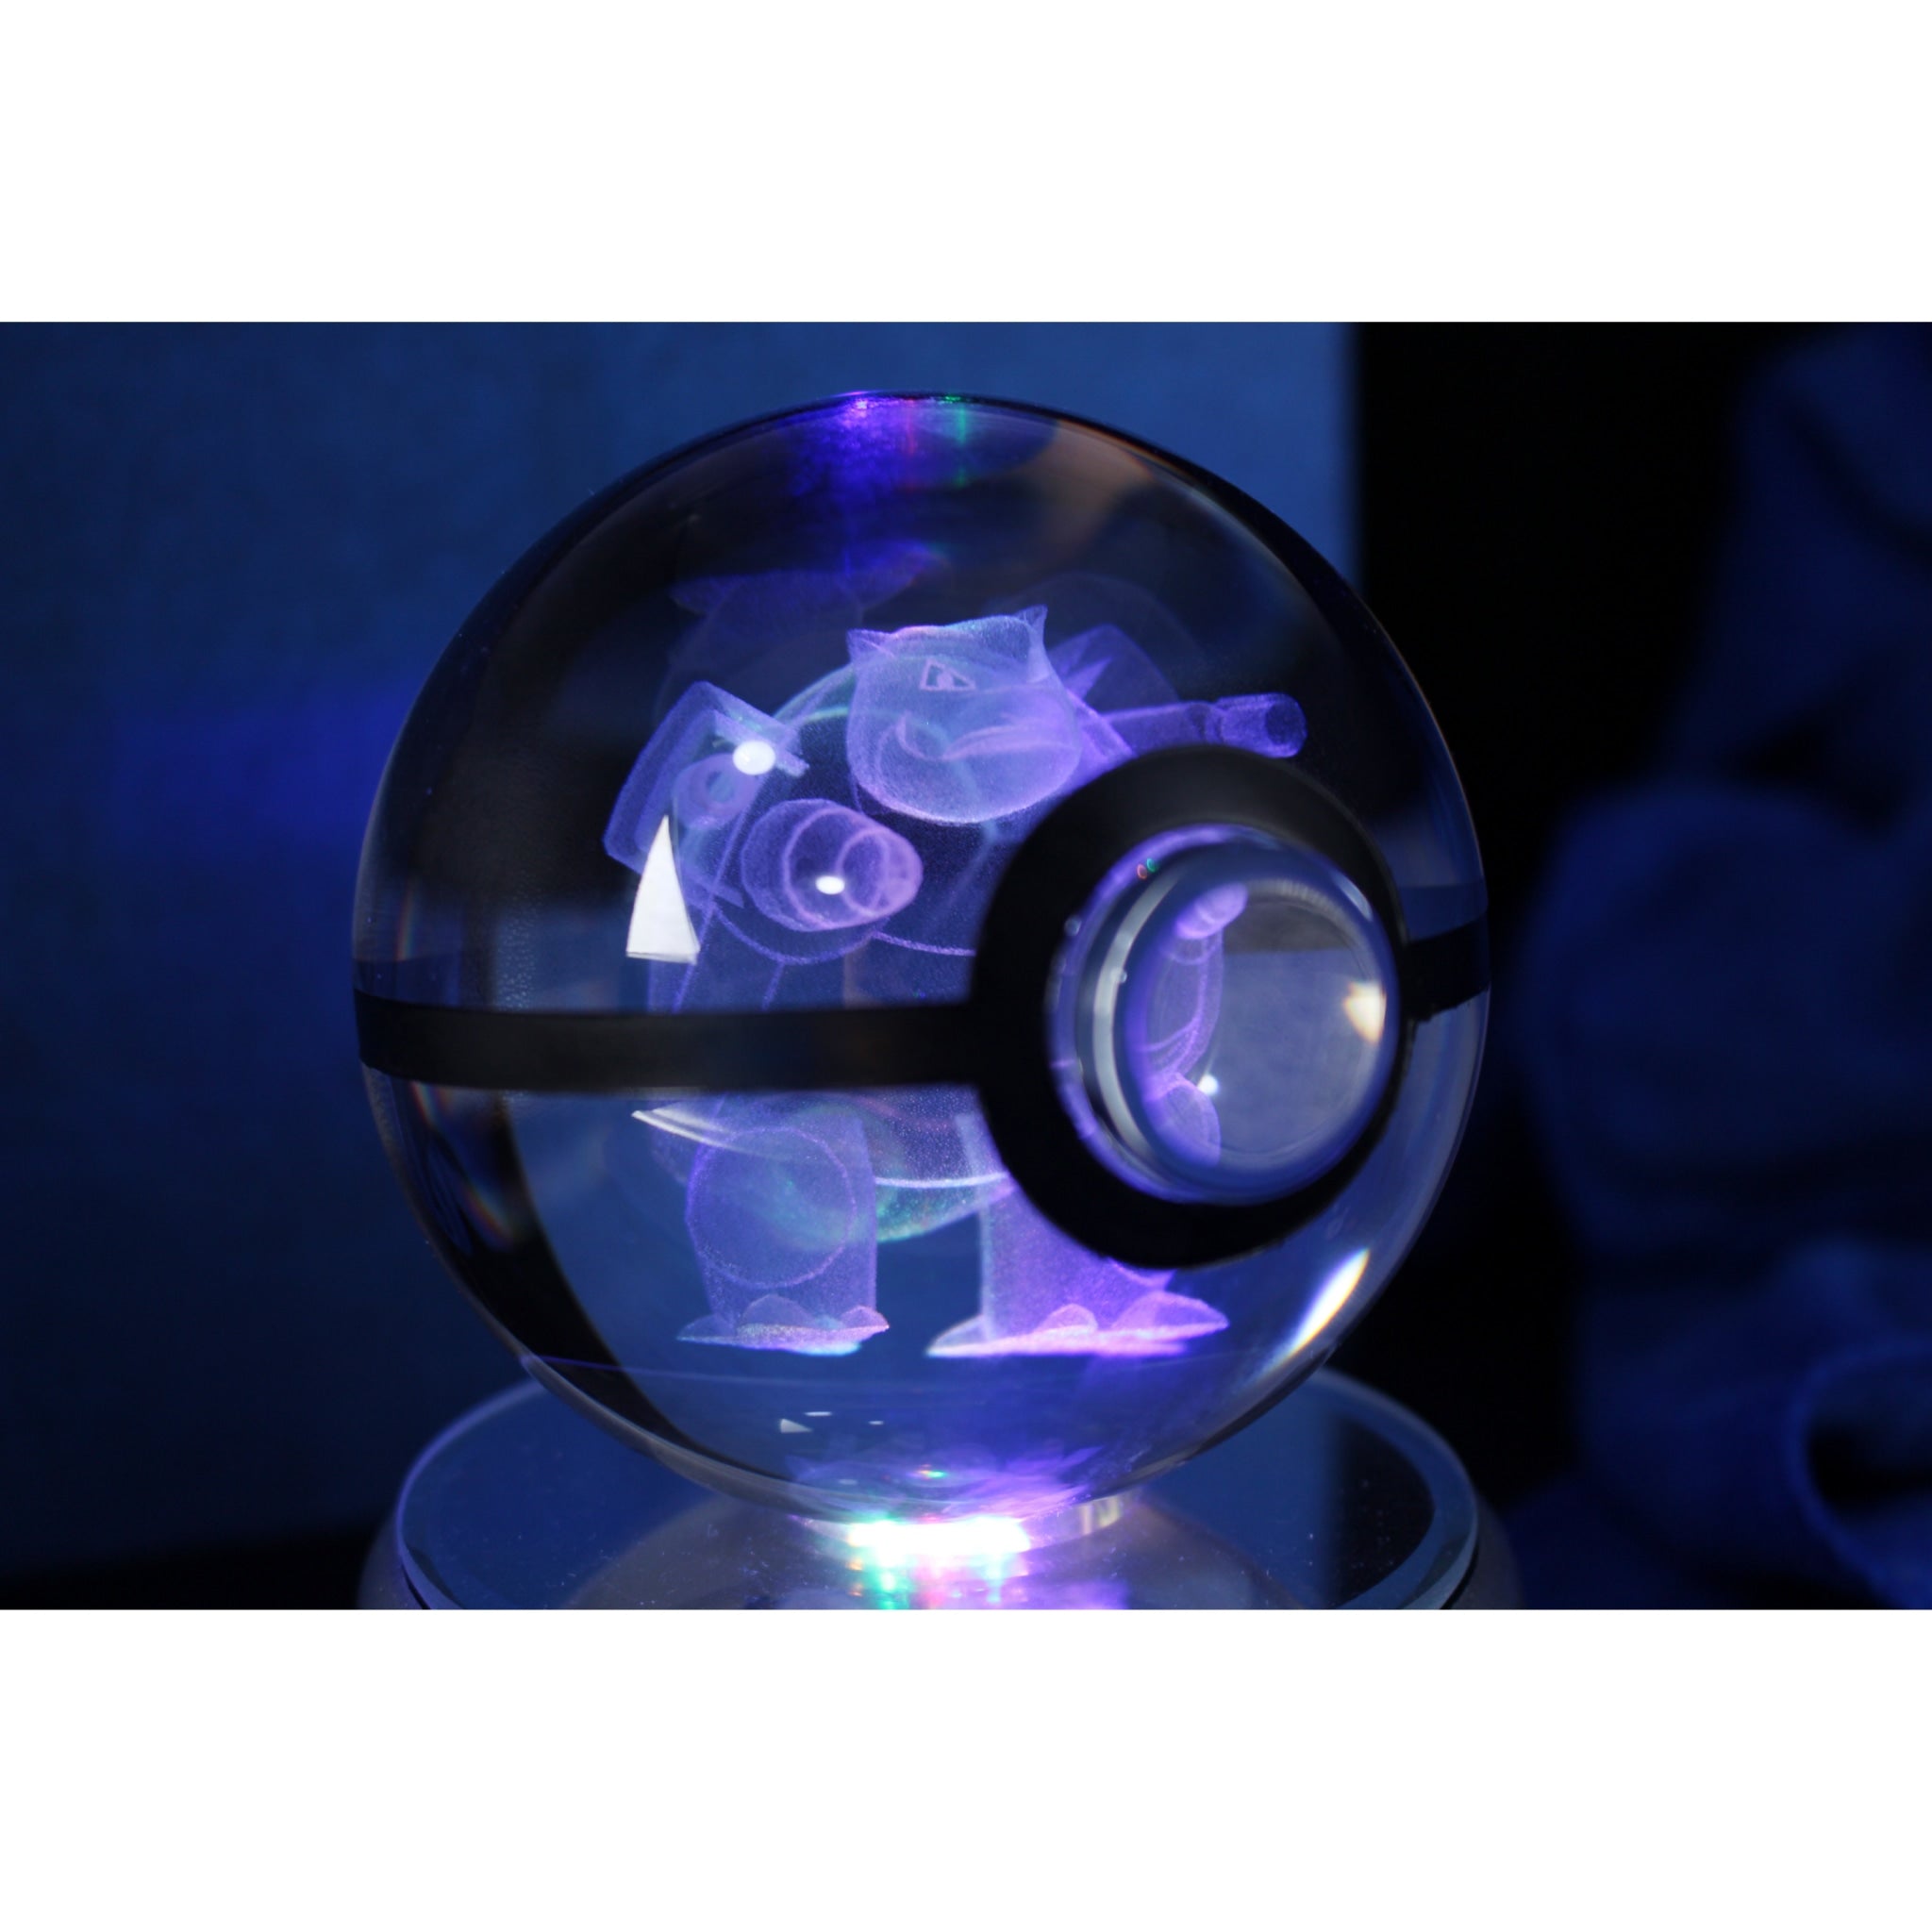 Blastoise Pokemon Glass Crystal Pokeball 23 with Light-Up LED Base Ornament 80mm XL Size